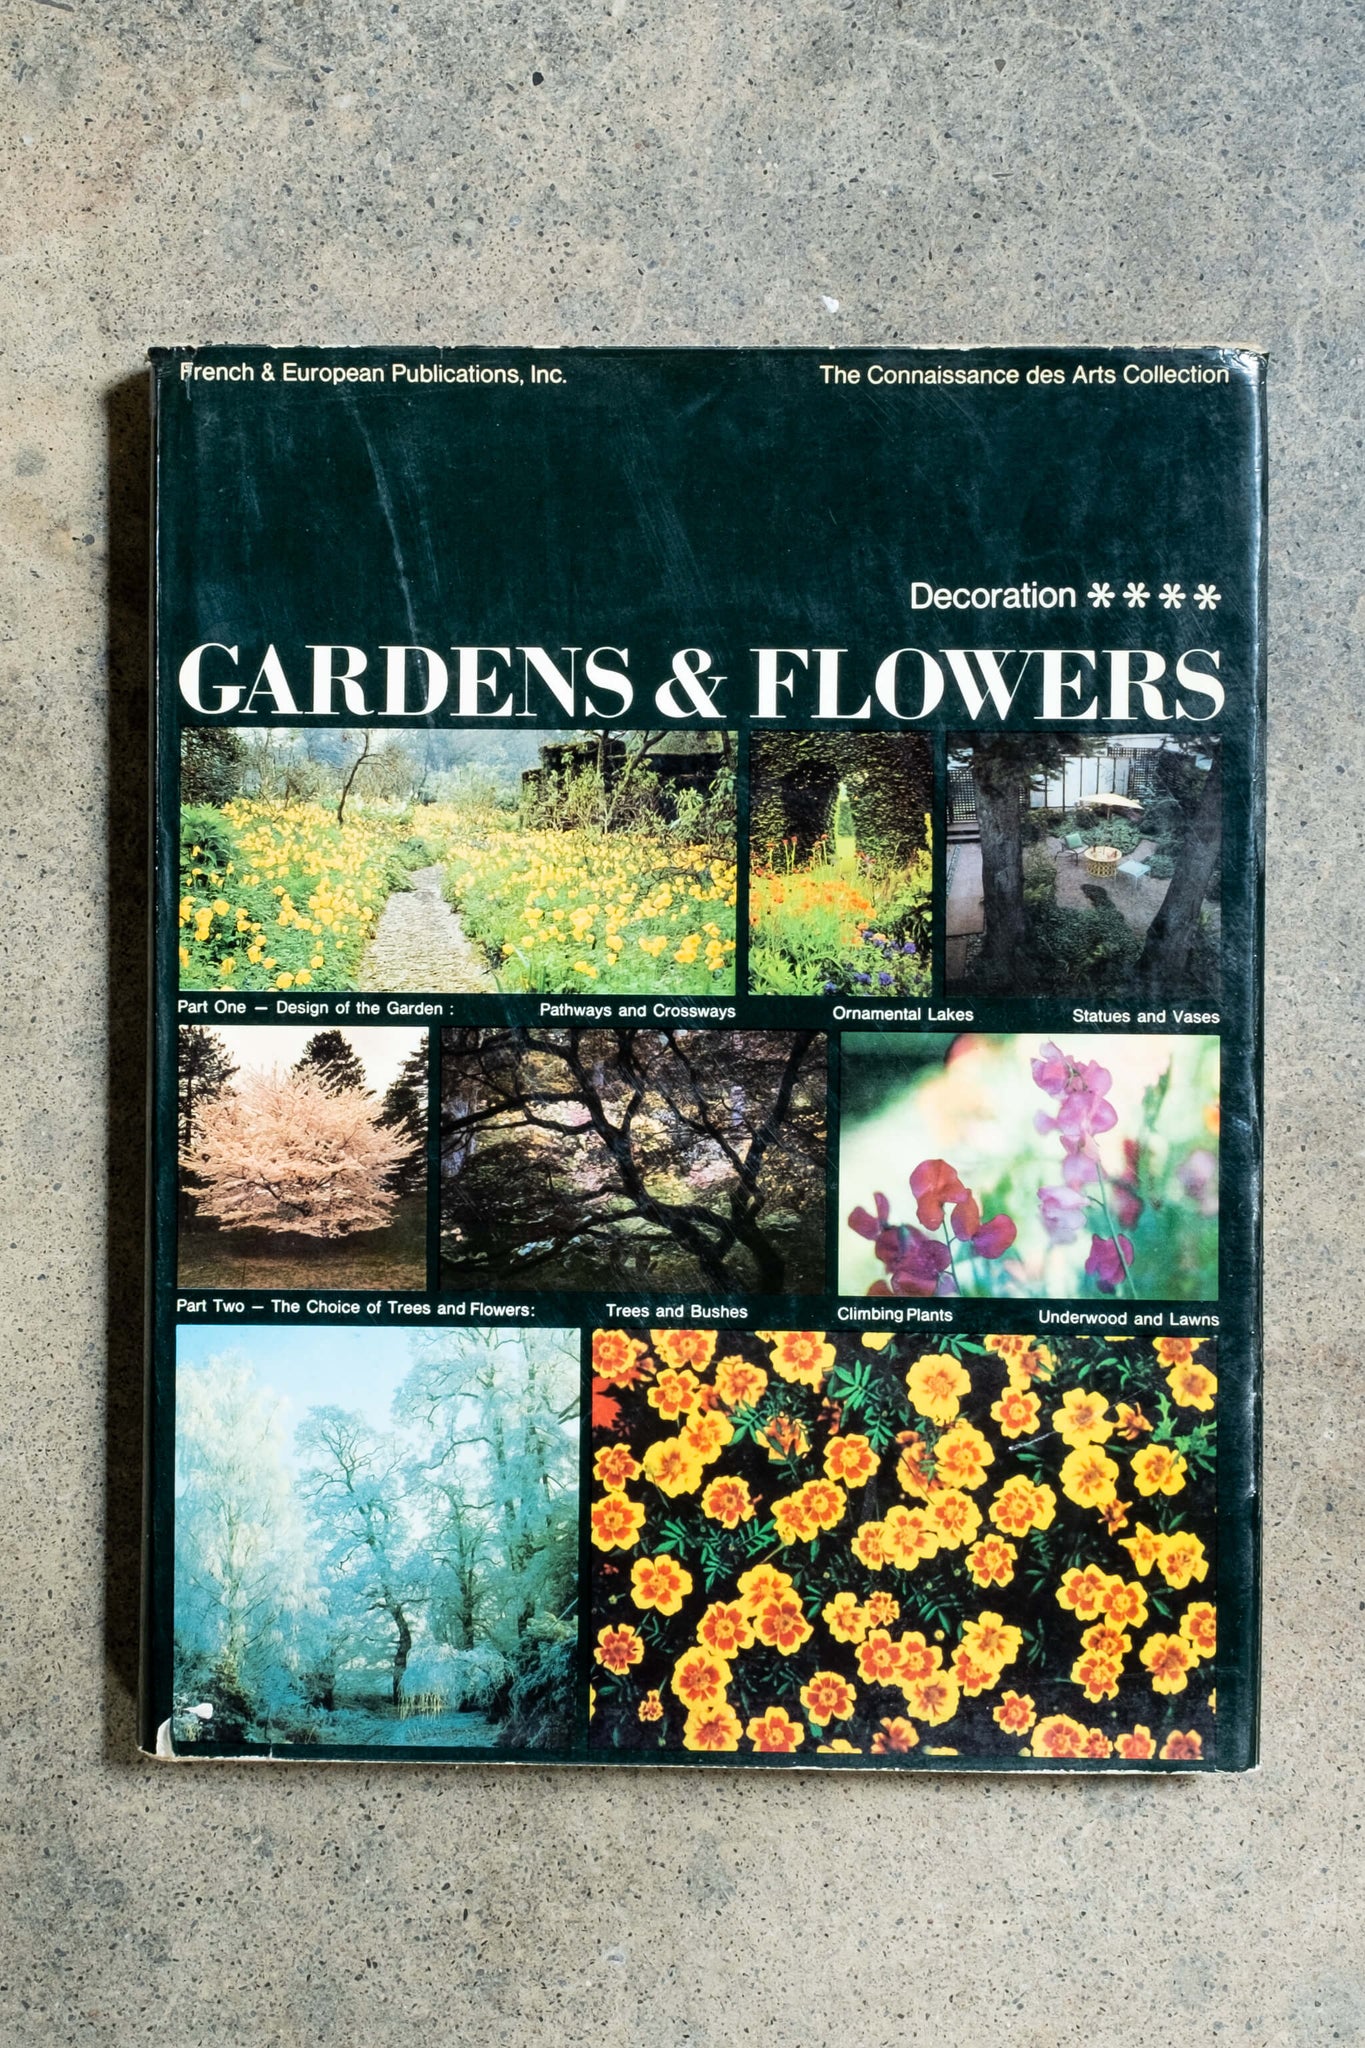 Gardens & Flowers